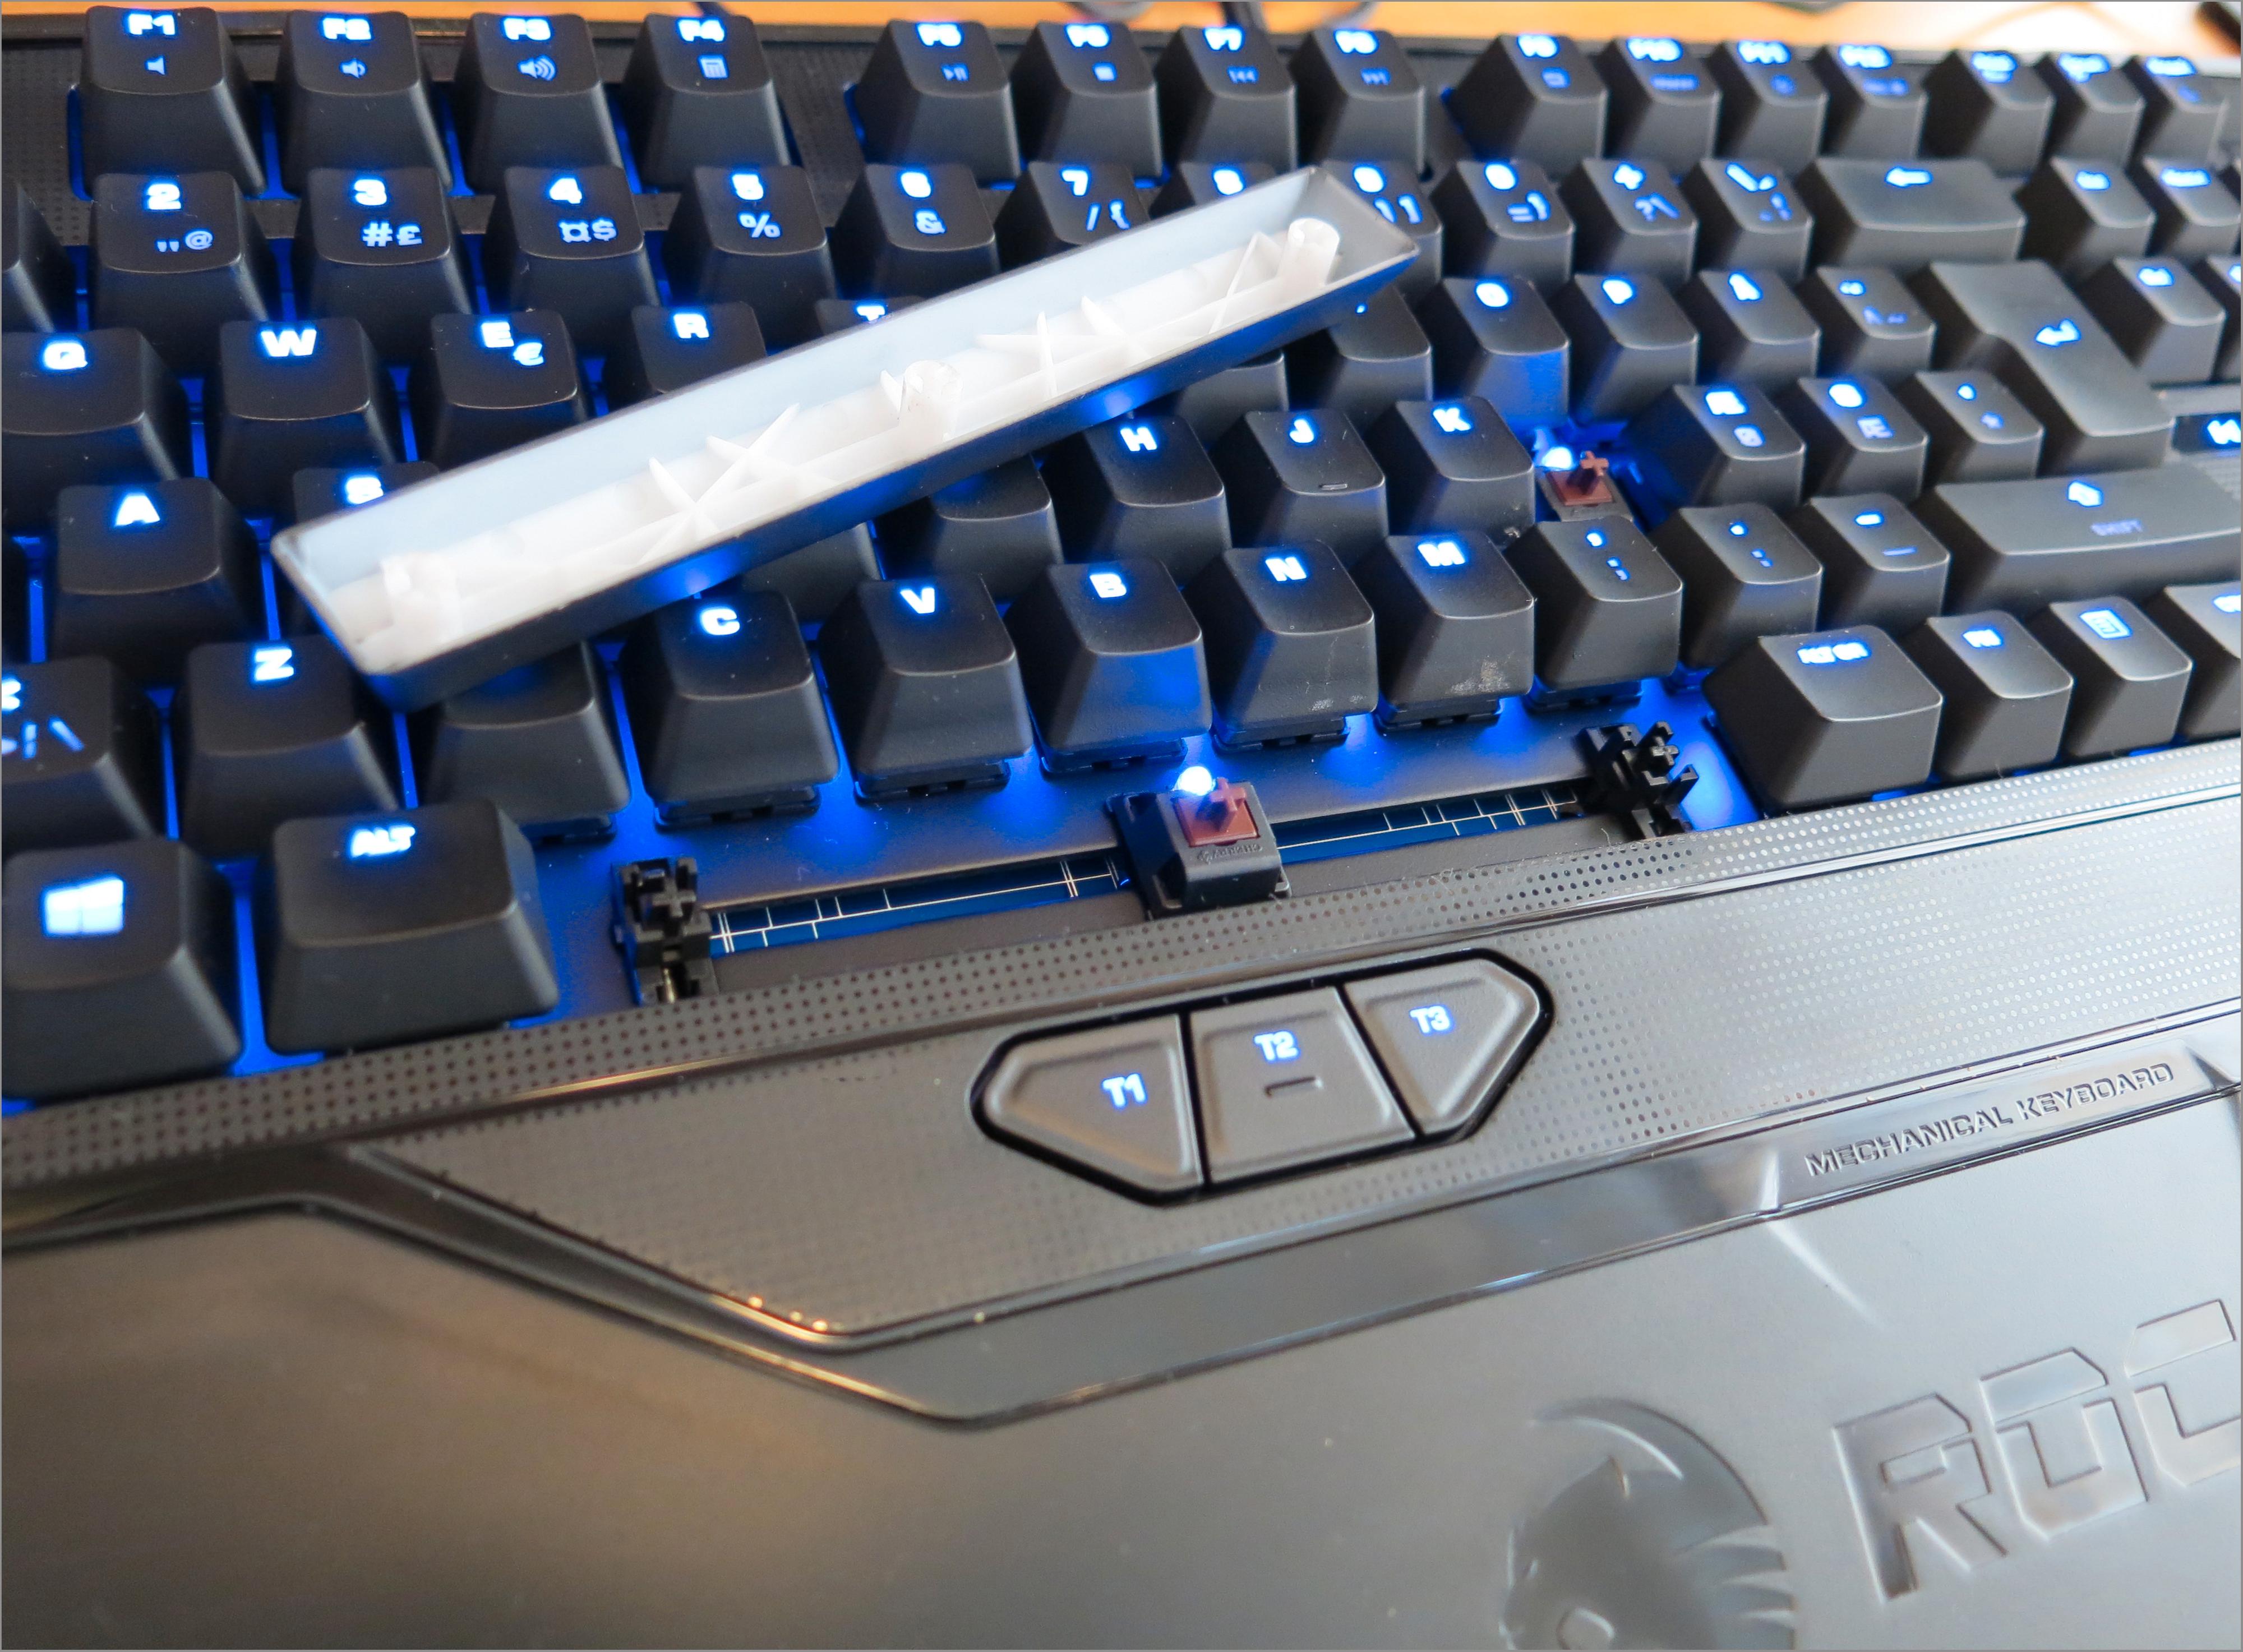 Cherry MX Brown-bryterne har hver sin egen LED, som lyser i velkjent blåfarge. Foto: Torstein Sørnes, Hardware.no